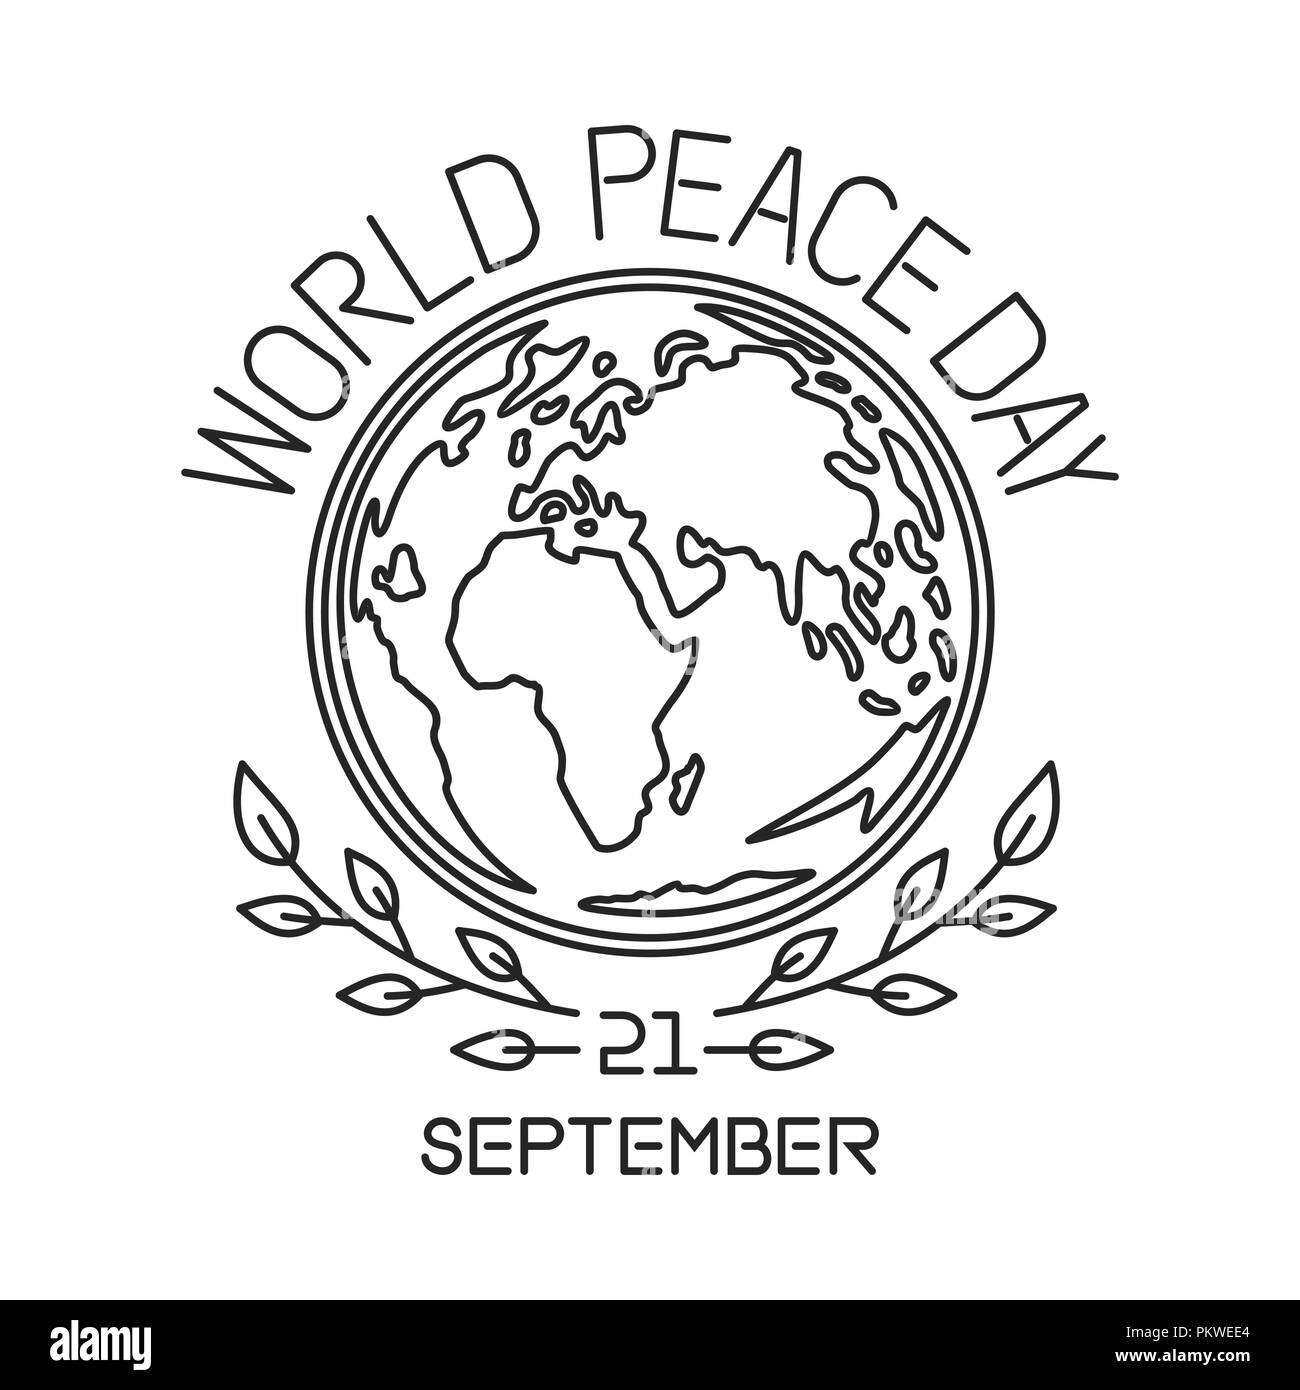 World Peace Day line logo design. International Day of Peace. September 21. Vector illustration Stock Vector